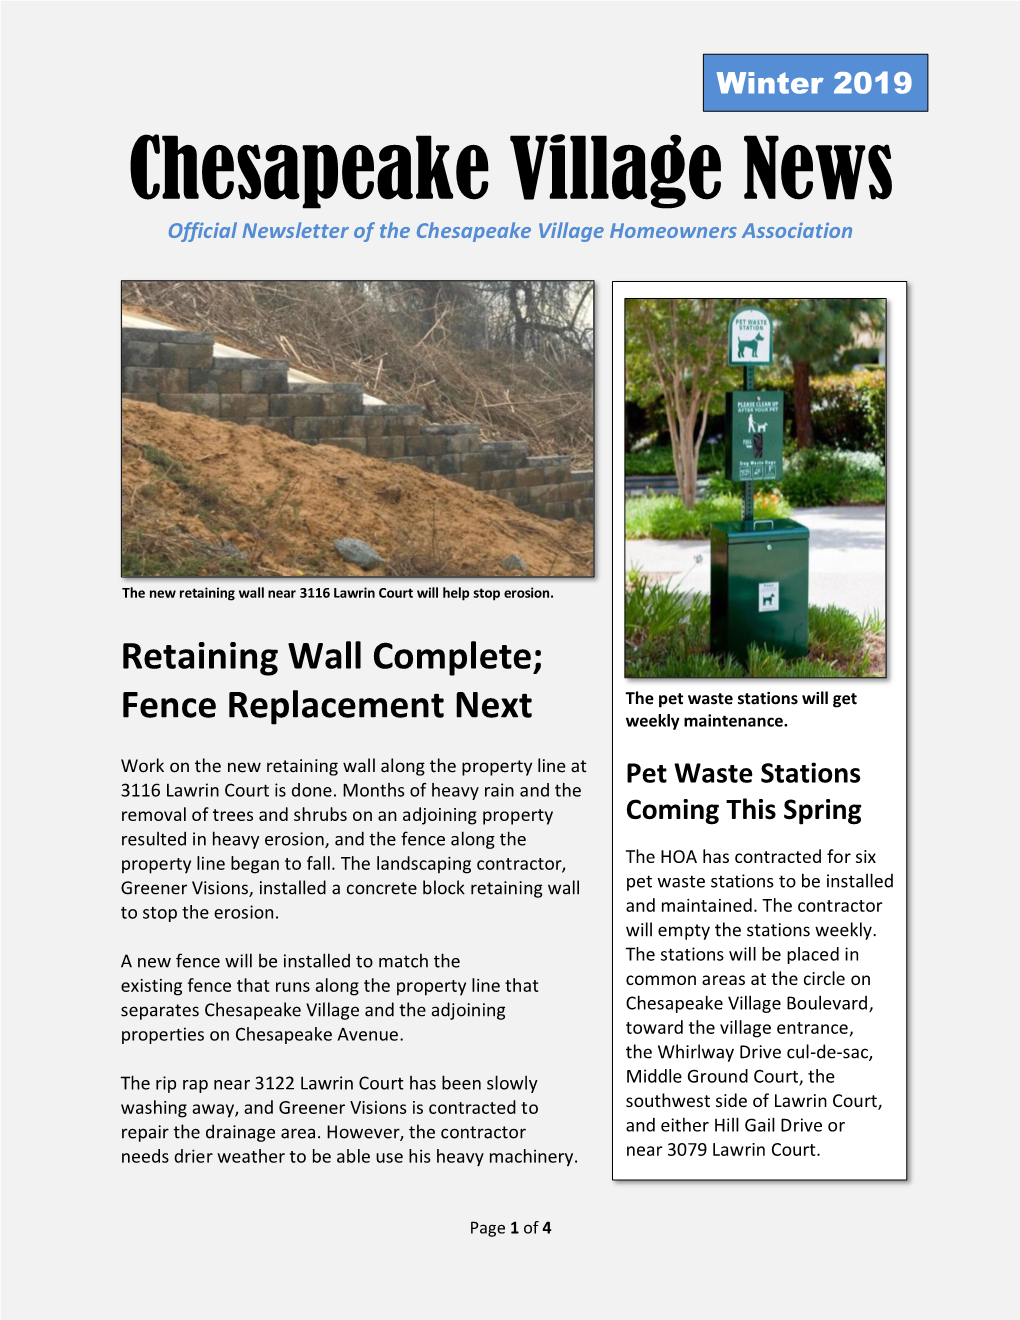 Chesapeake Village News Official Newsletter of the Chesapeake Village Homeowners Association